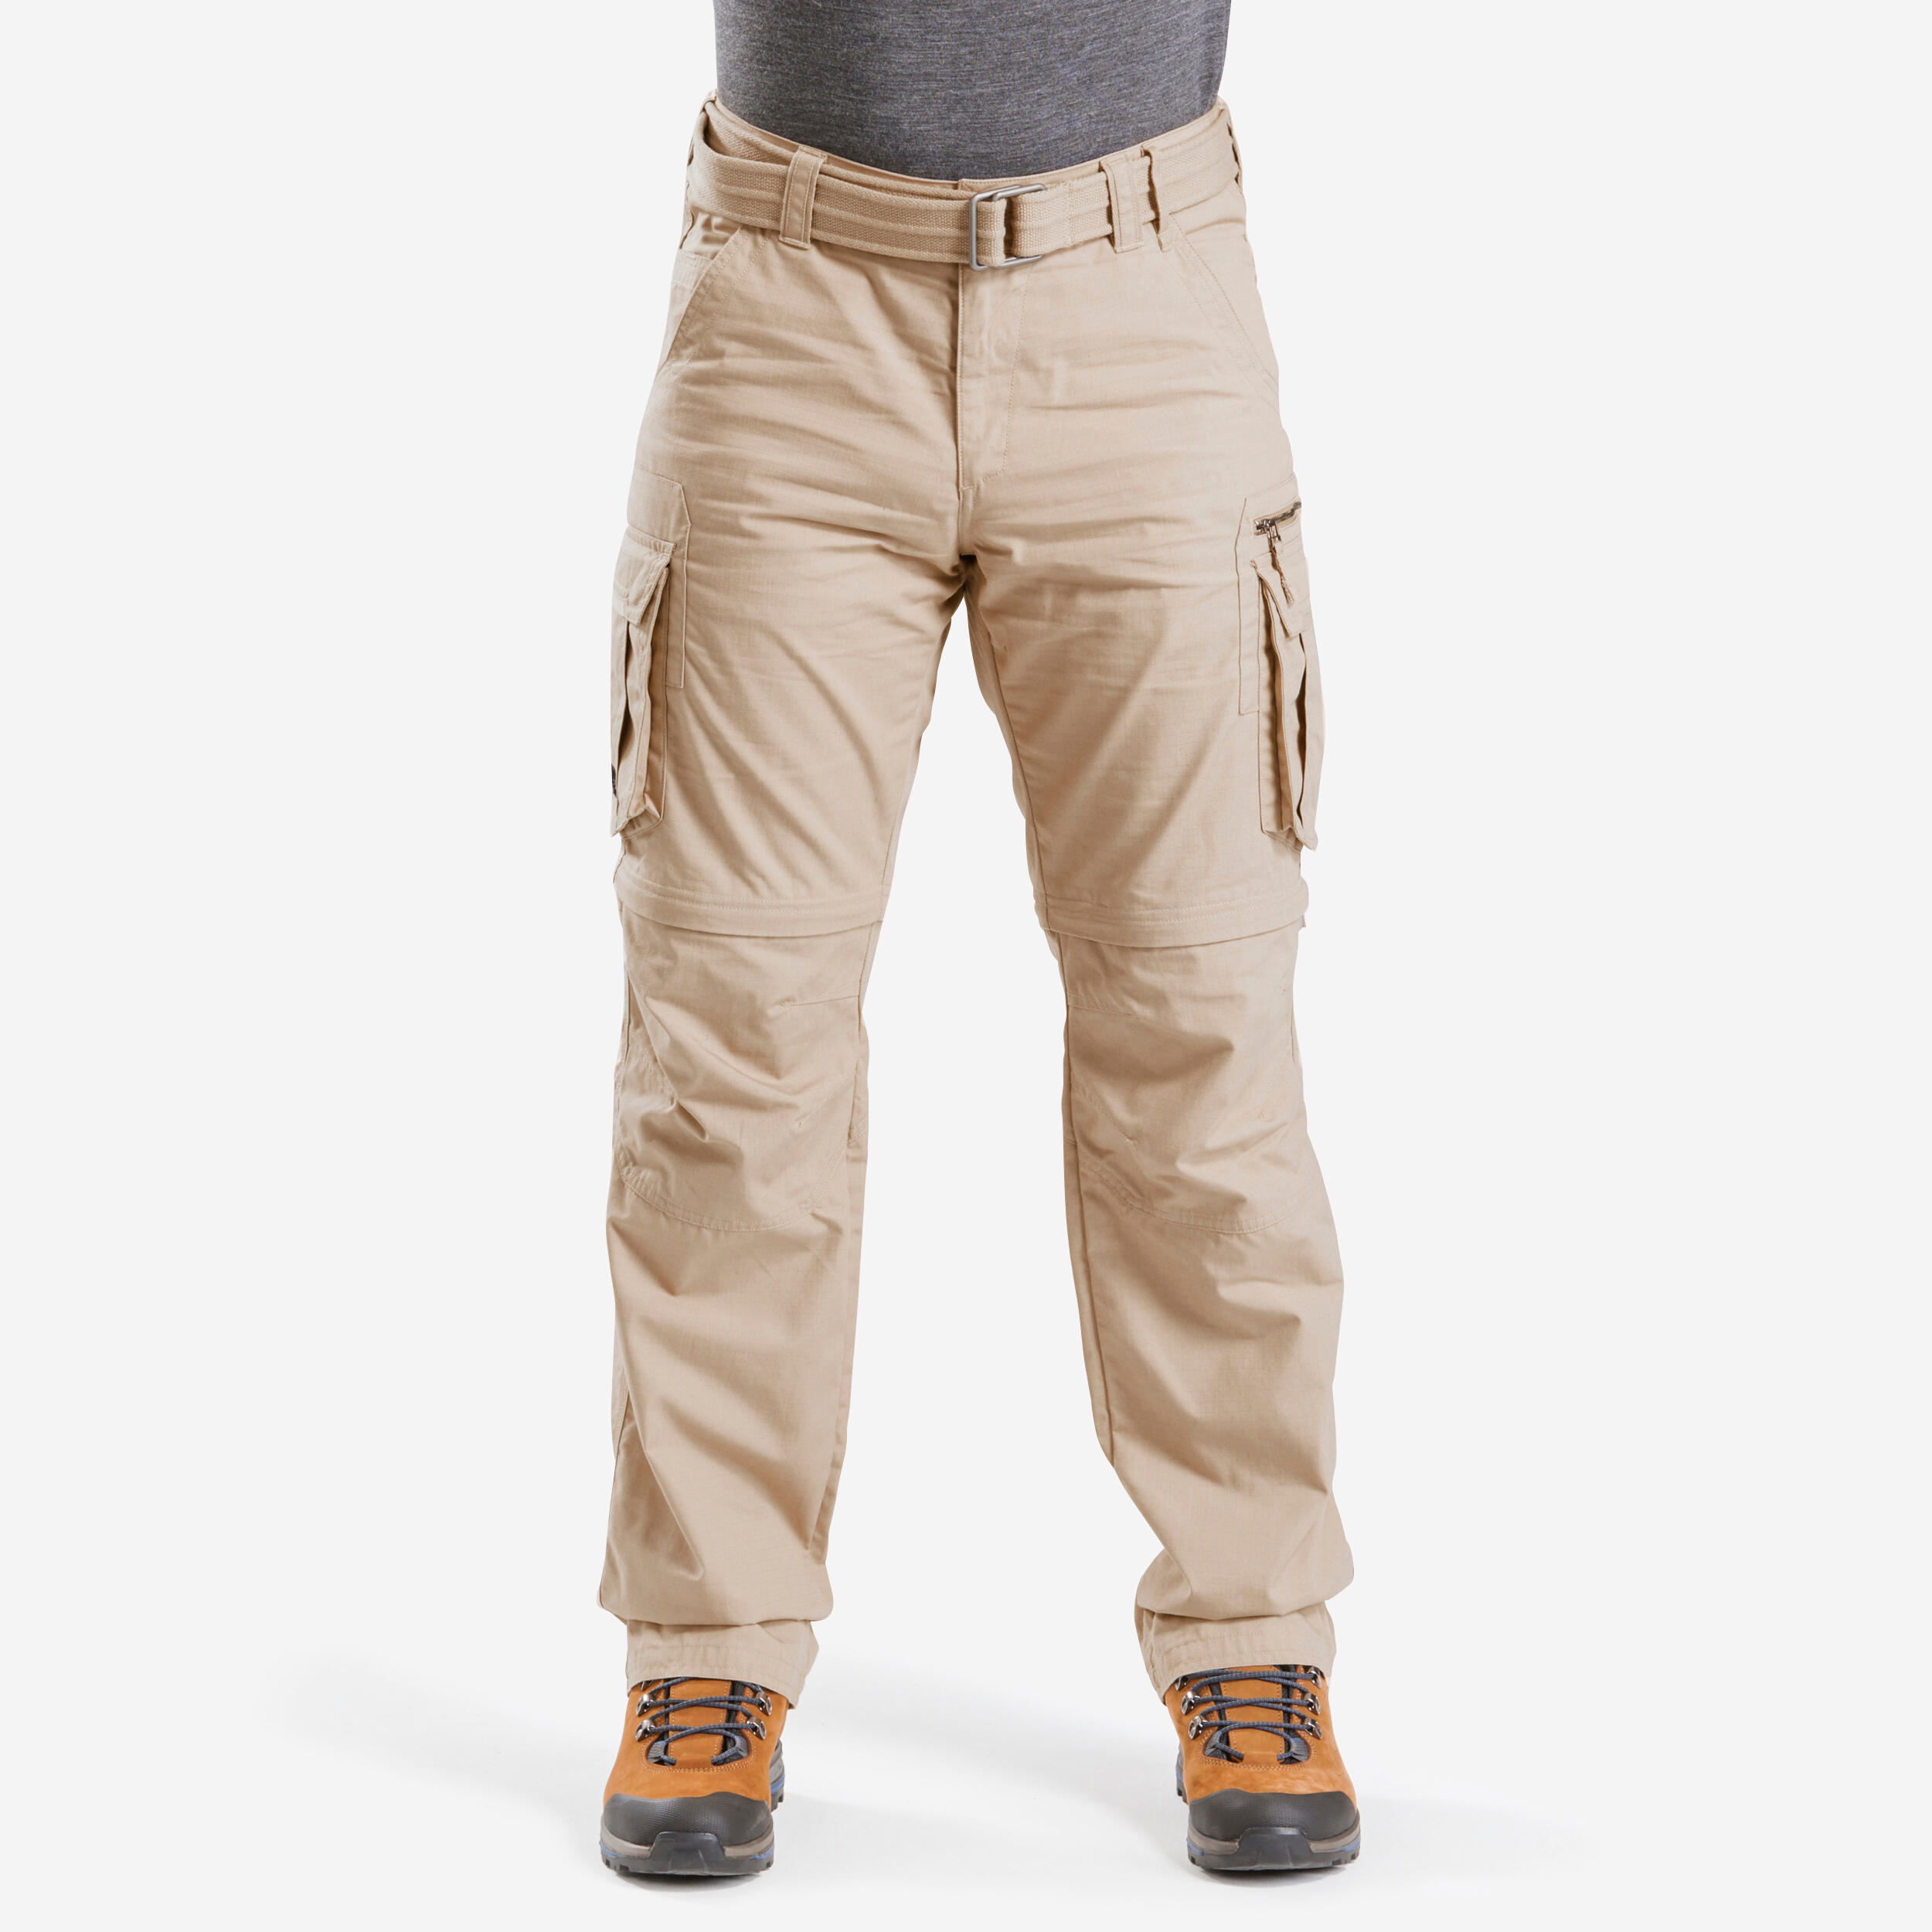 QUECHUA by DECATHLON - Men's MH150 Convertible Hiking Pants - Walmart.com